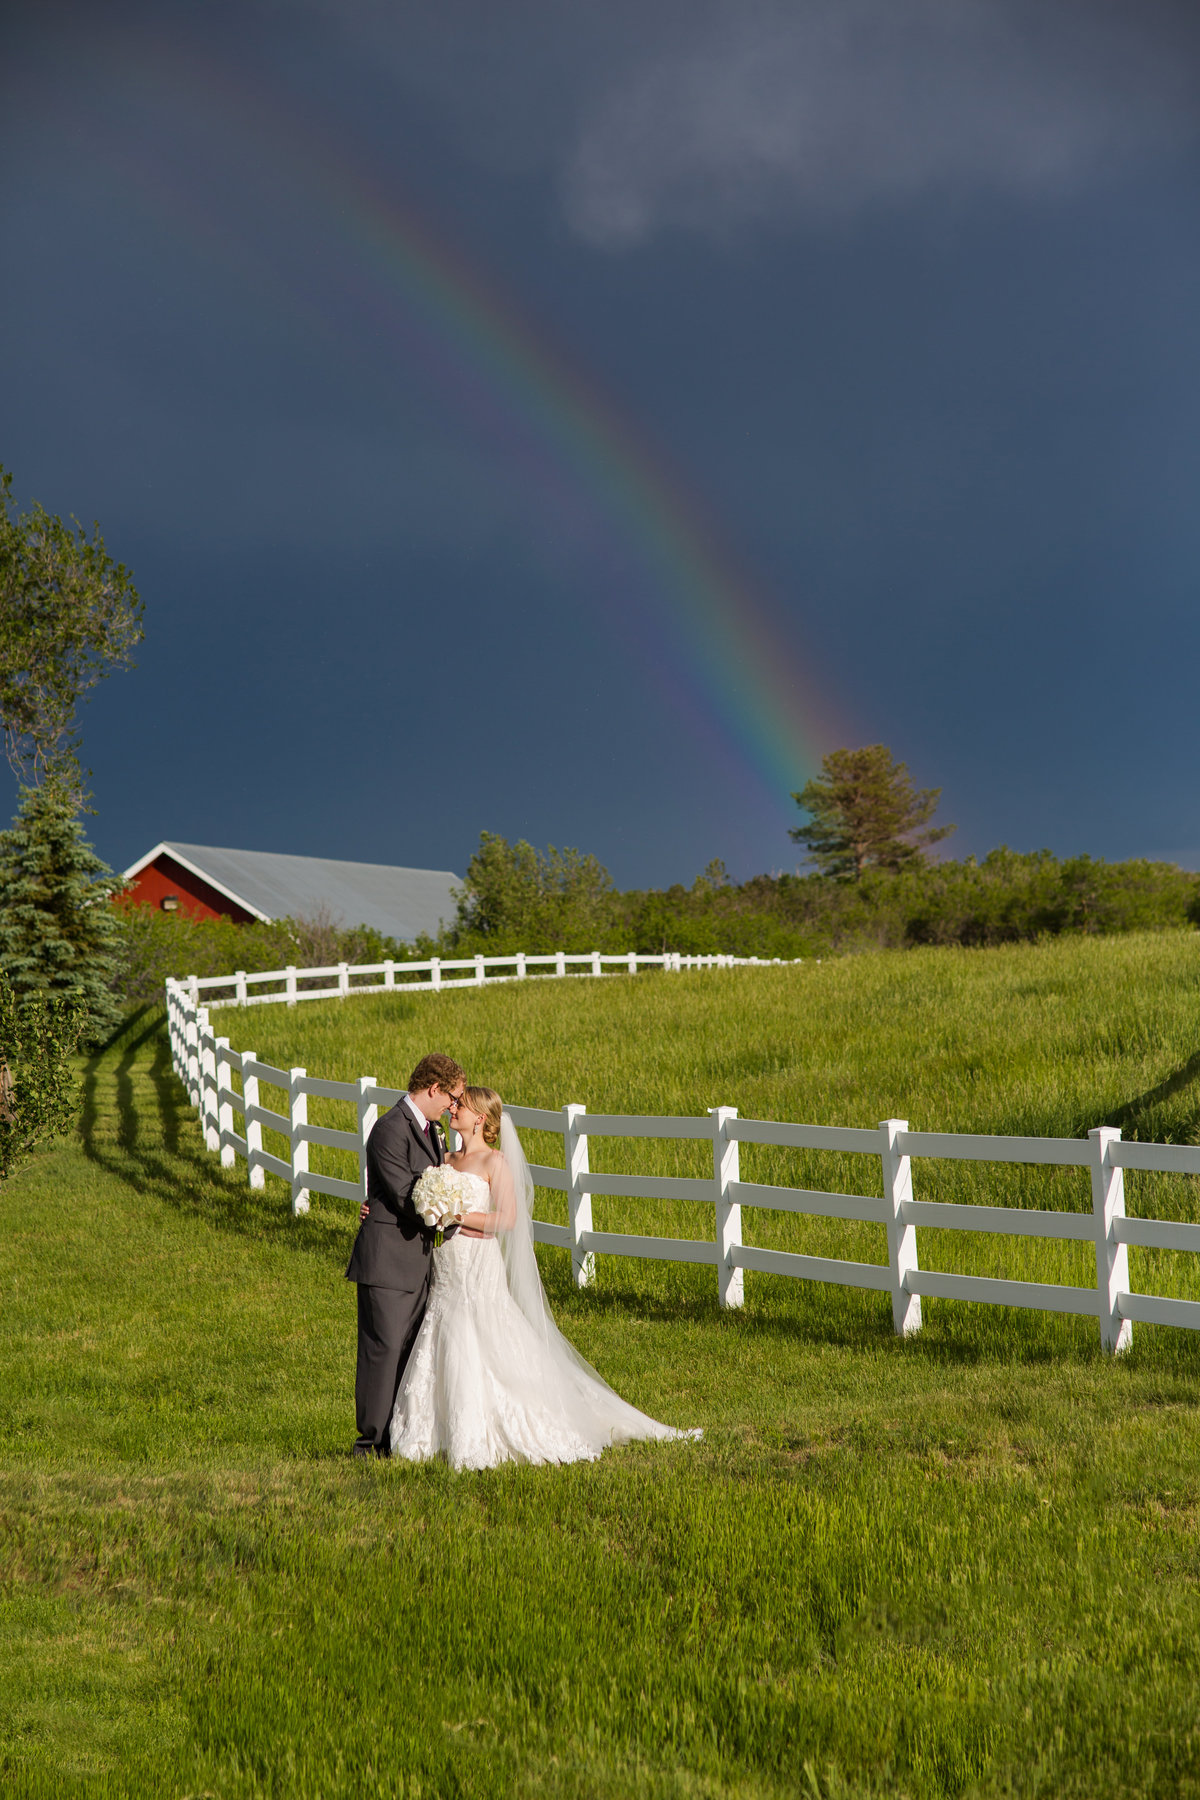 rainbow on wedding day